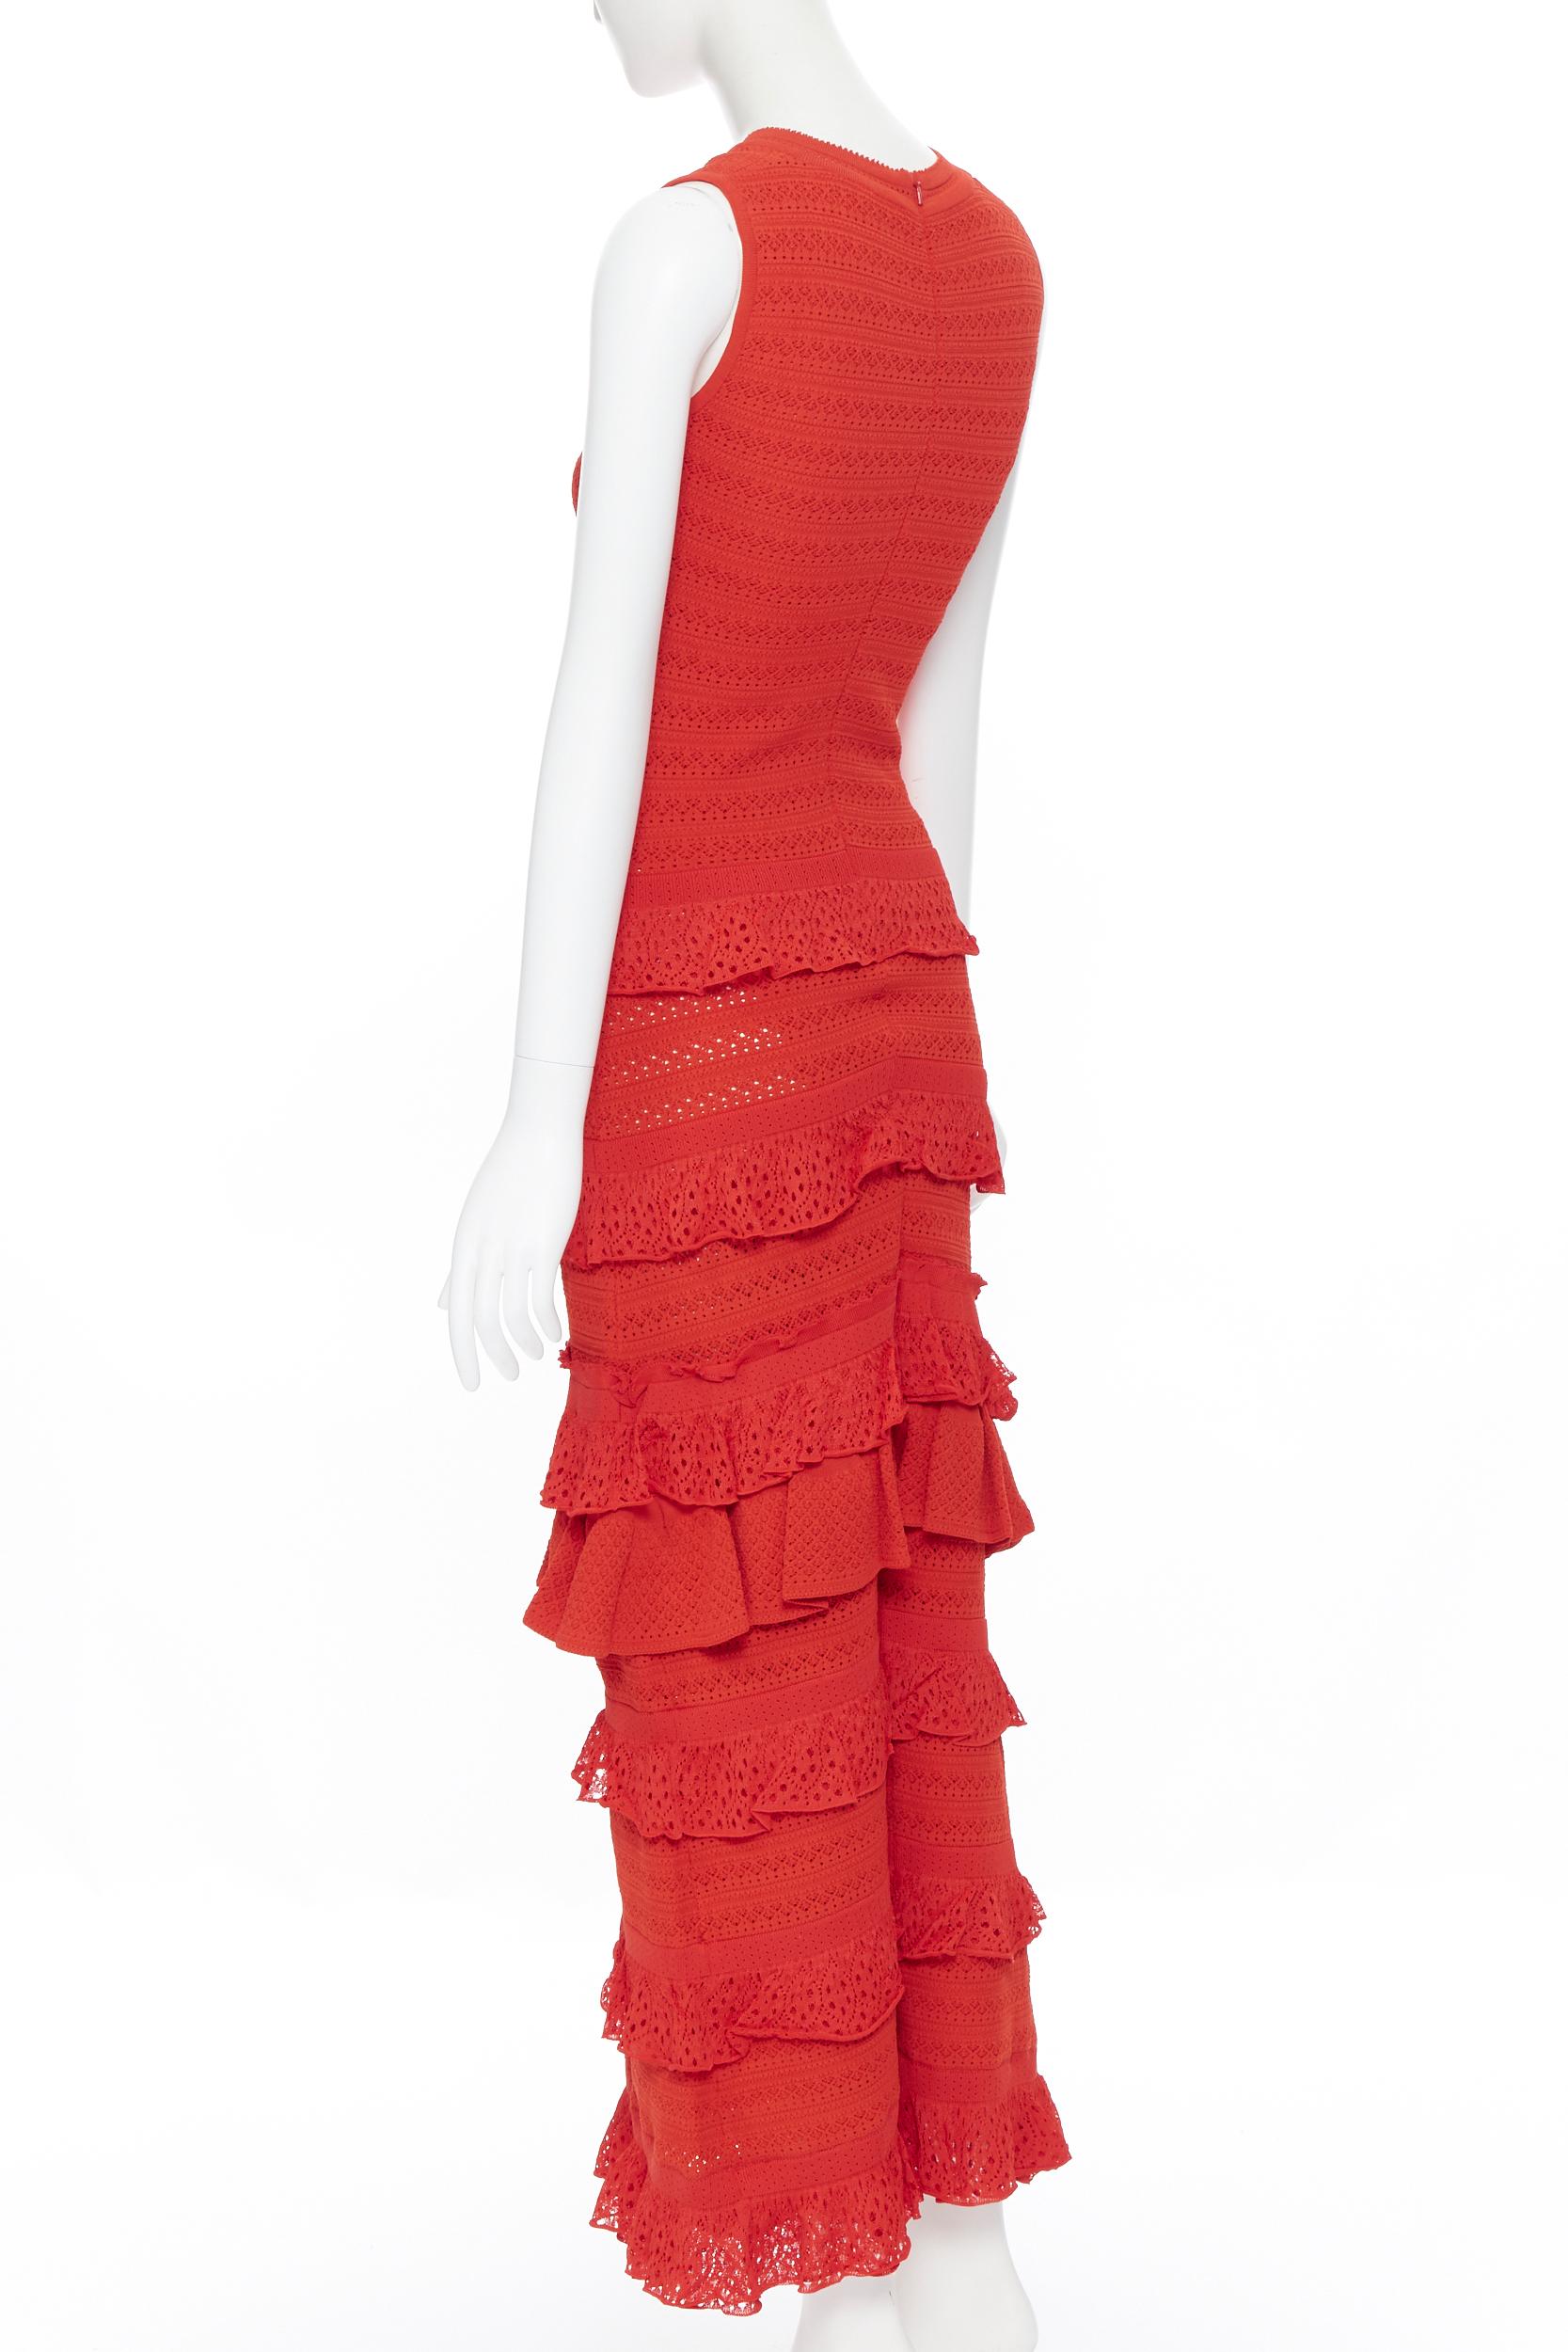 OSCAR DE LA RENTA SS17 red knitted tiered ruffle trimevening gown dress XS 1